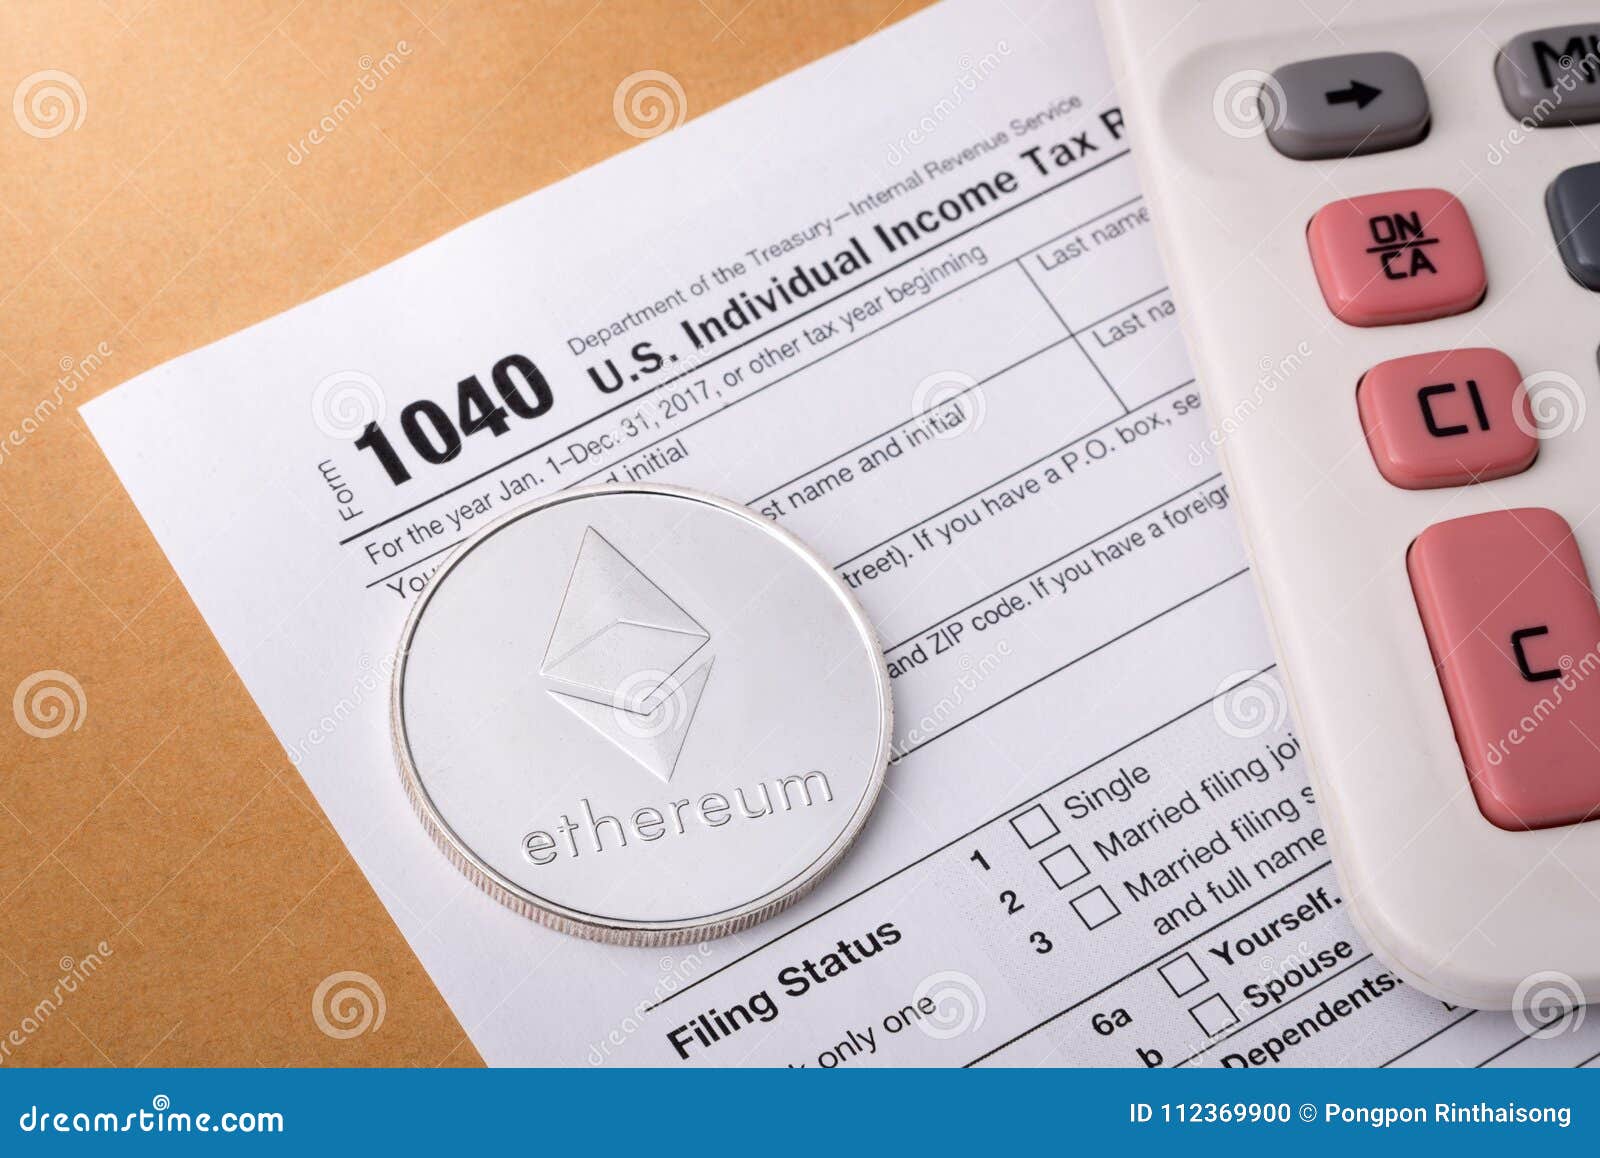 ethereum tax calculator